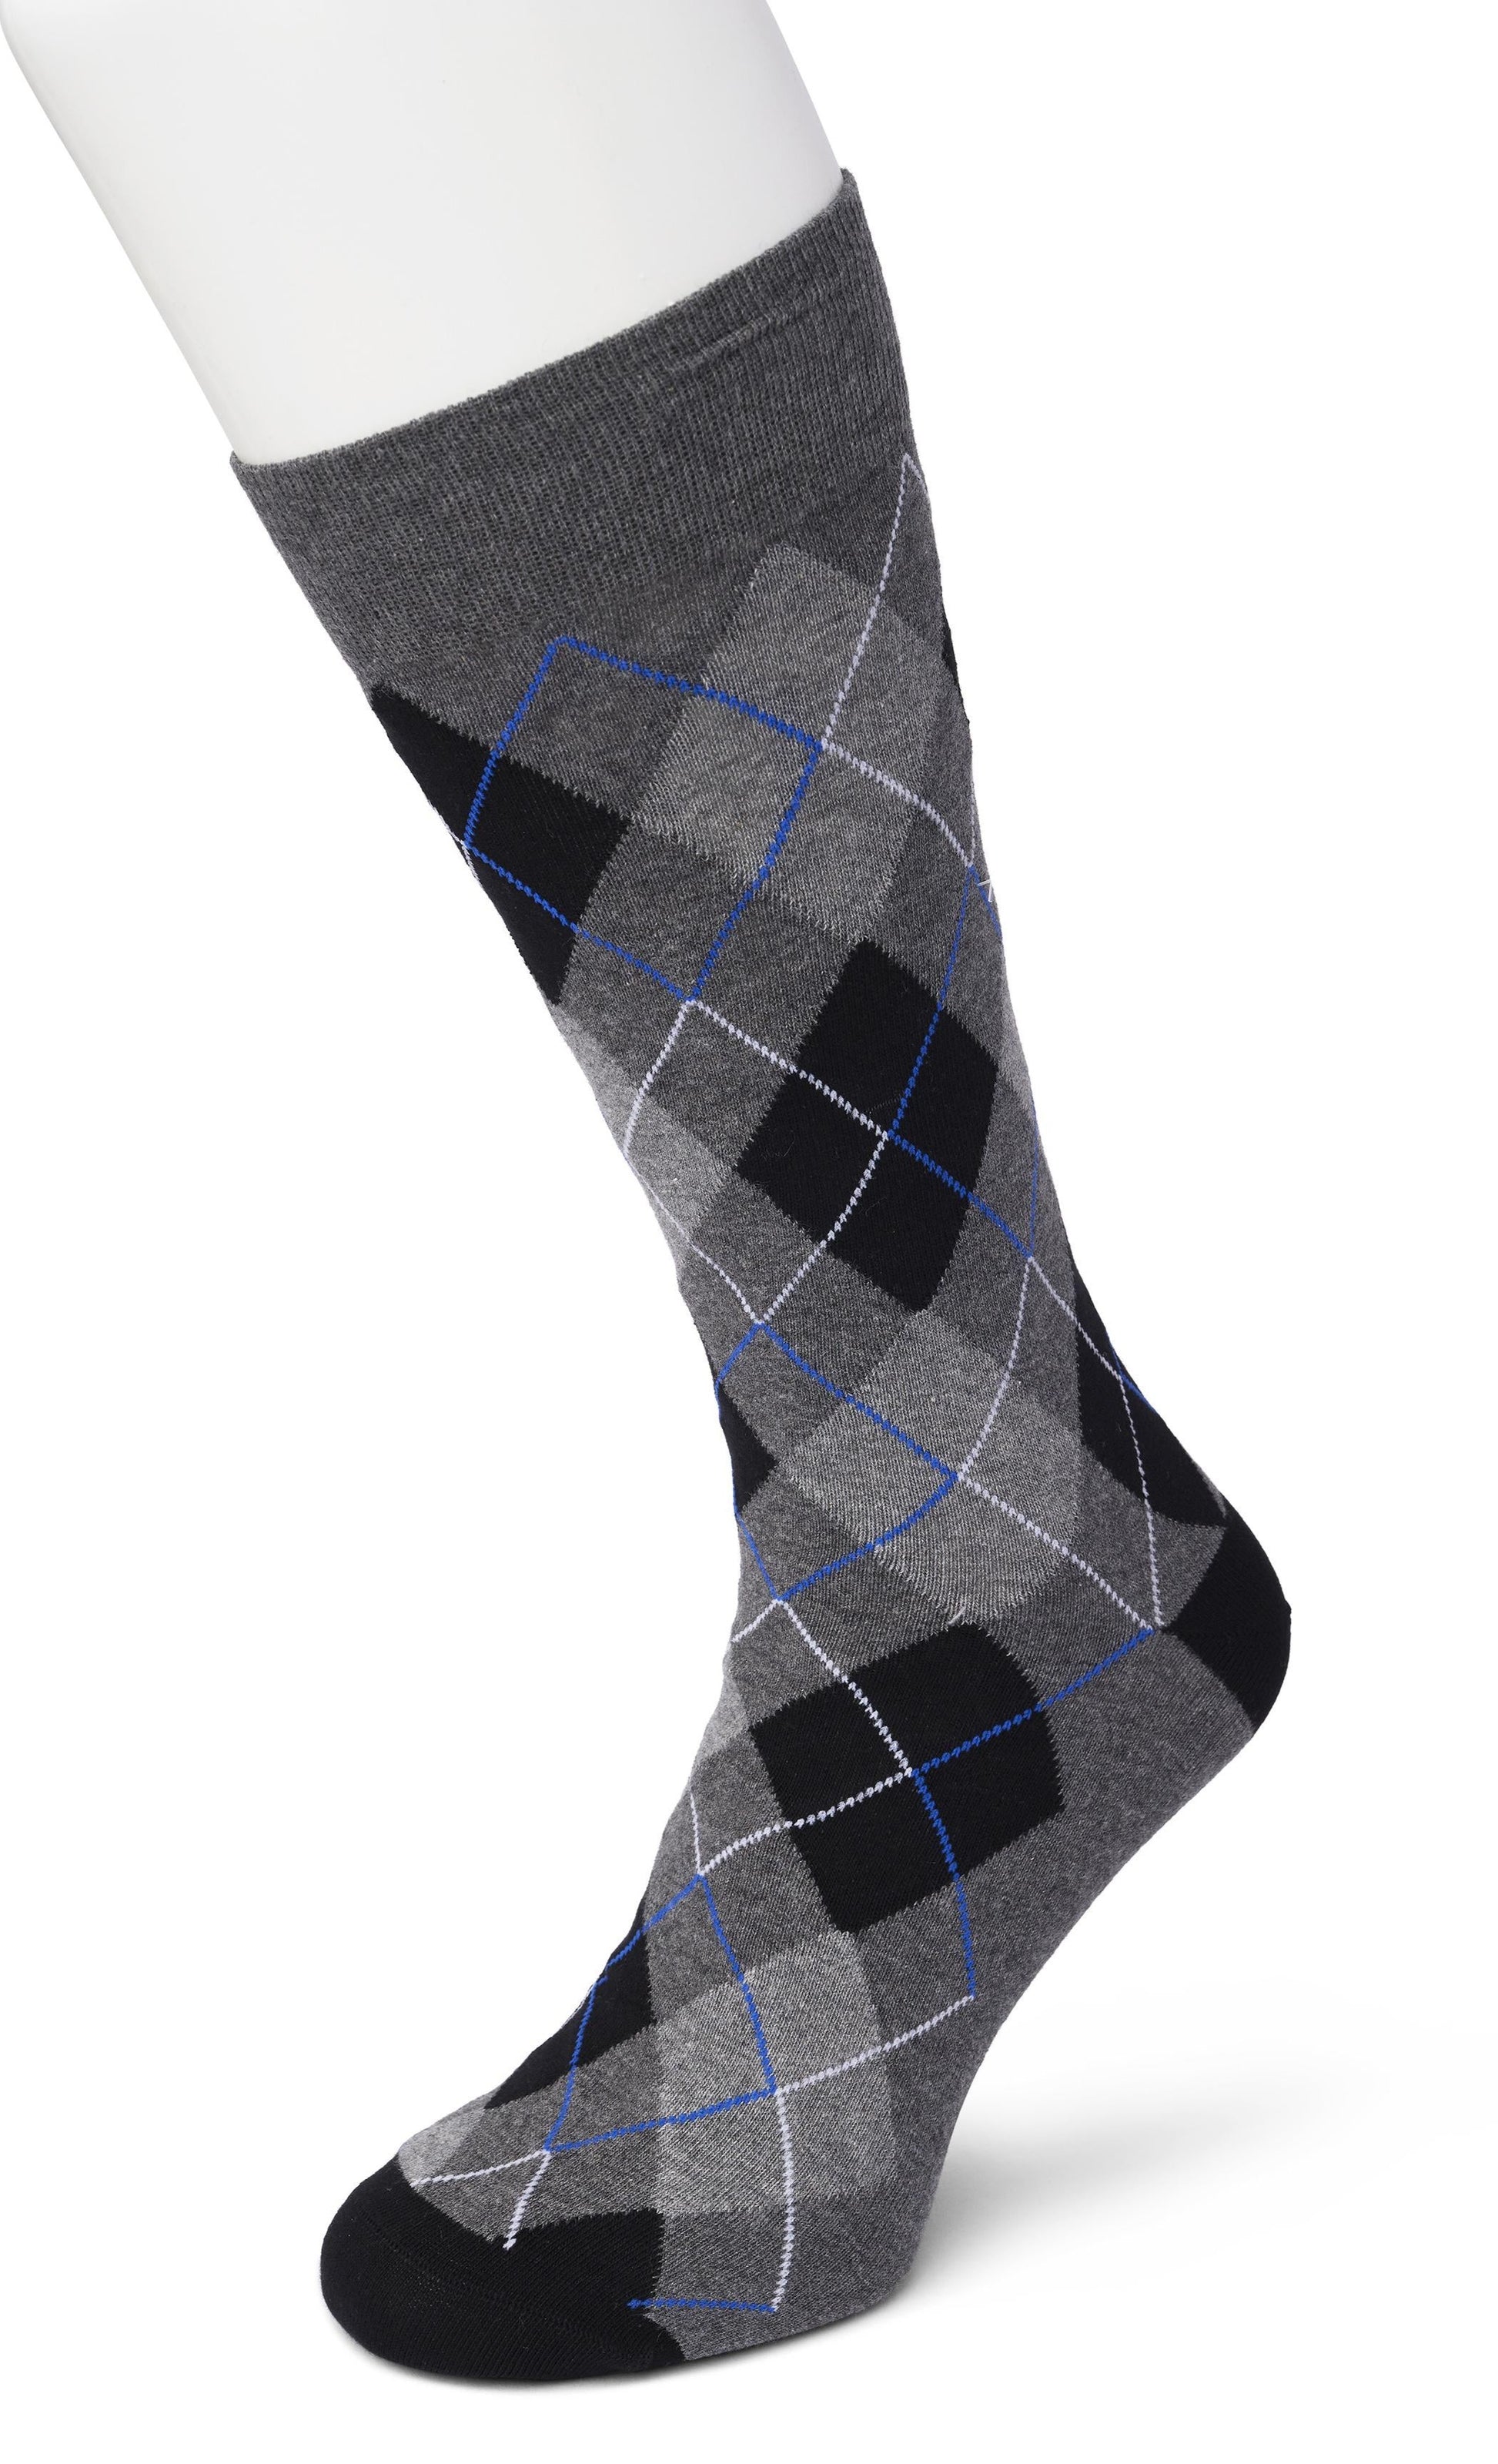 Bonnie Doon BP211122 Argyle Sock - Black, grey and blue cotton ankle socks with a golf style diamond argyle tartan check pattern.